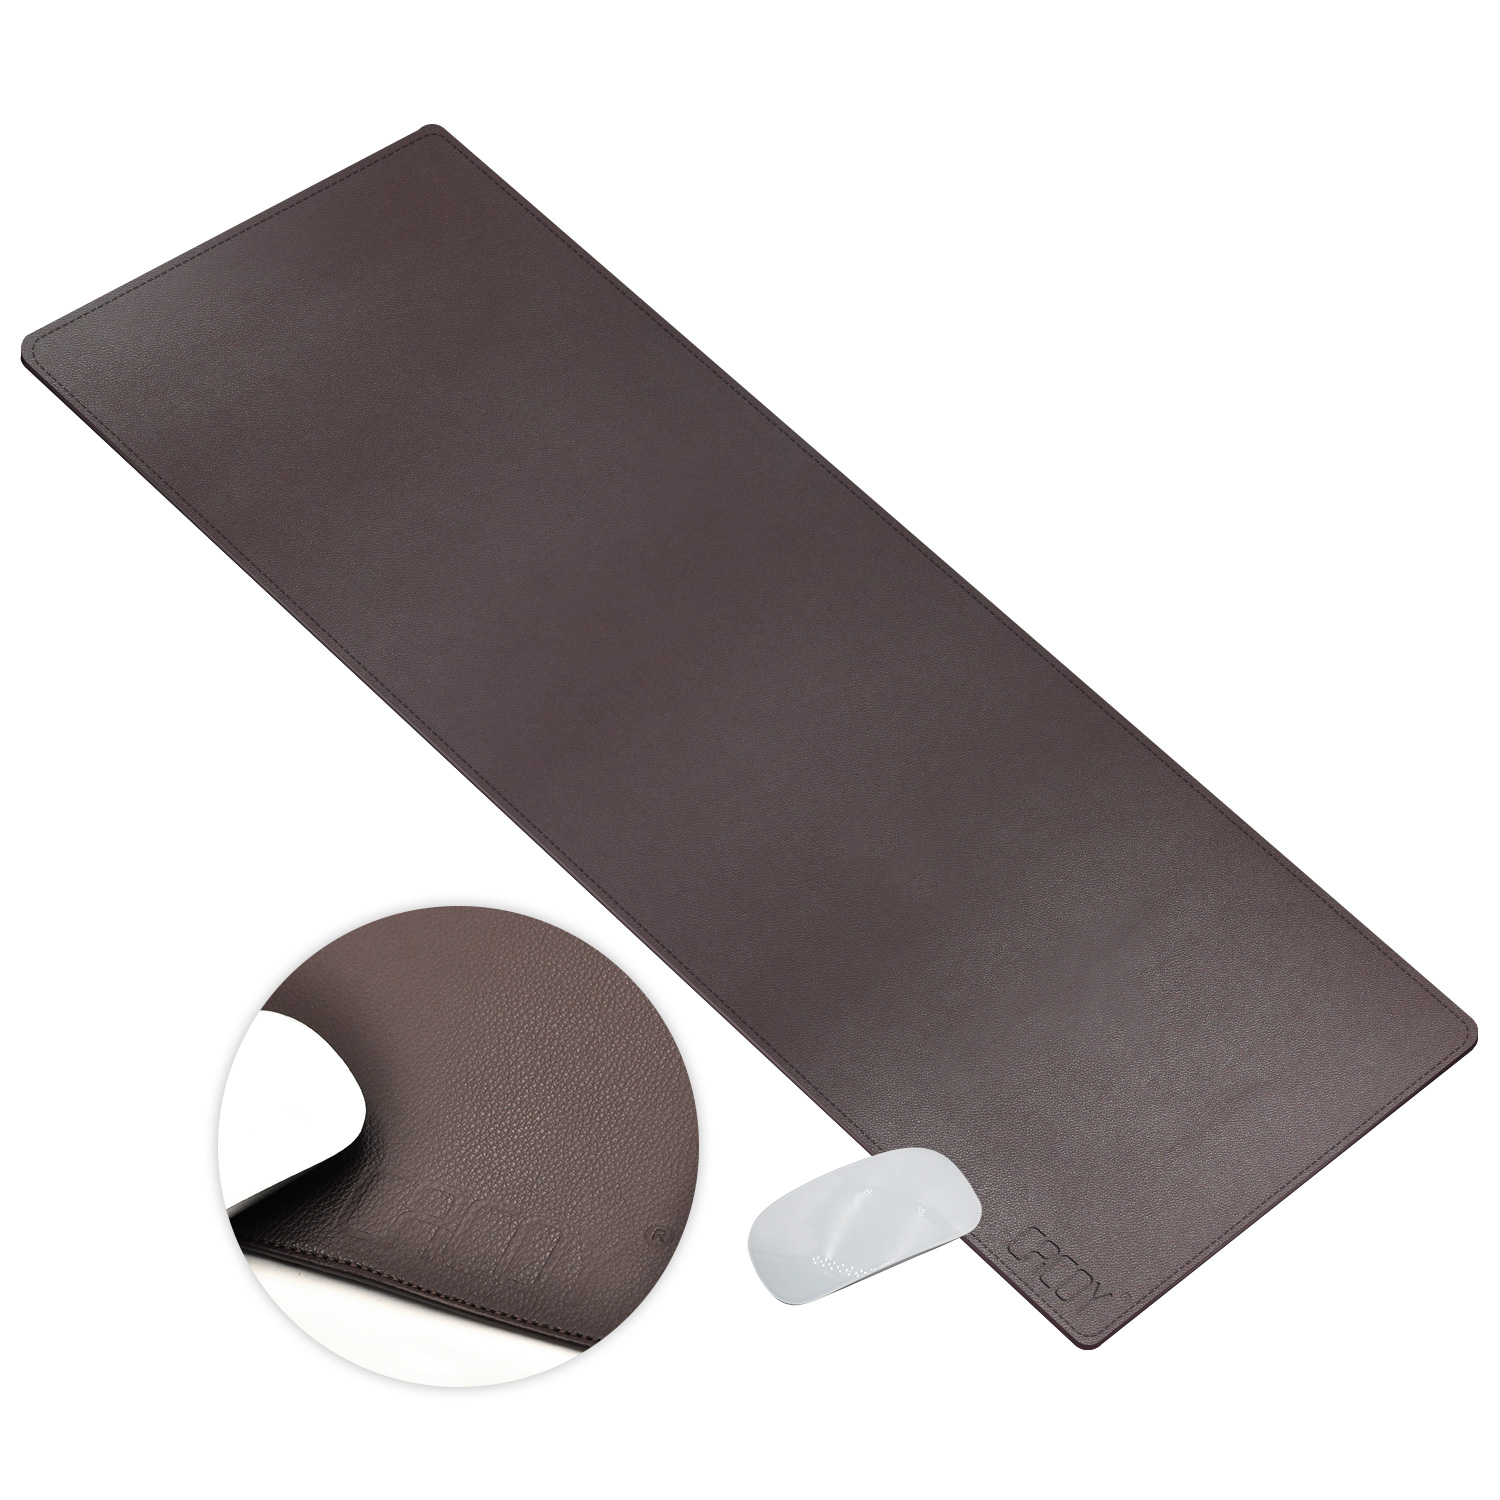 Extended Artificial Leather Desk Mat - Dark Brown